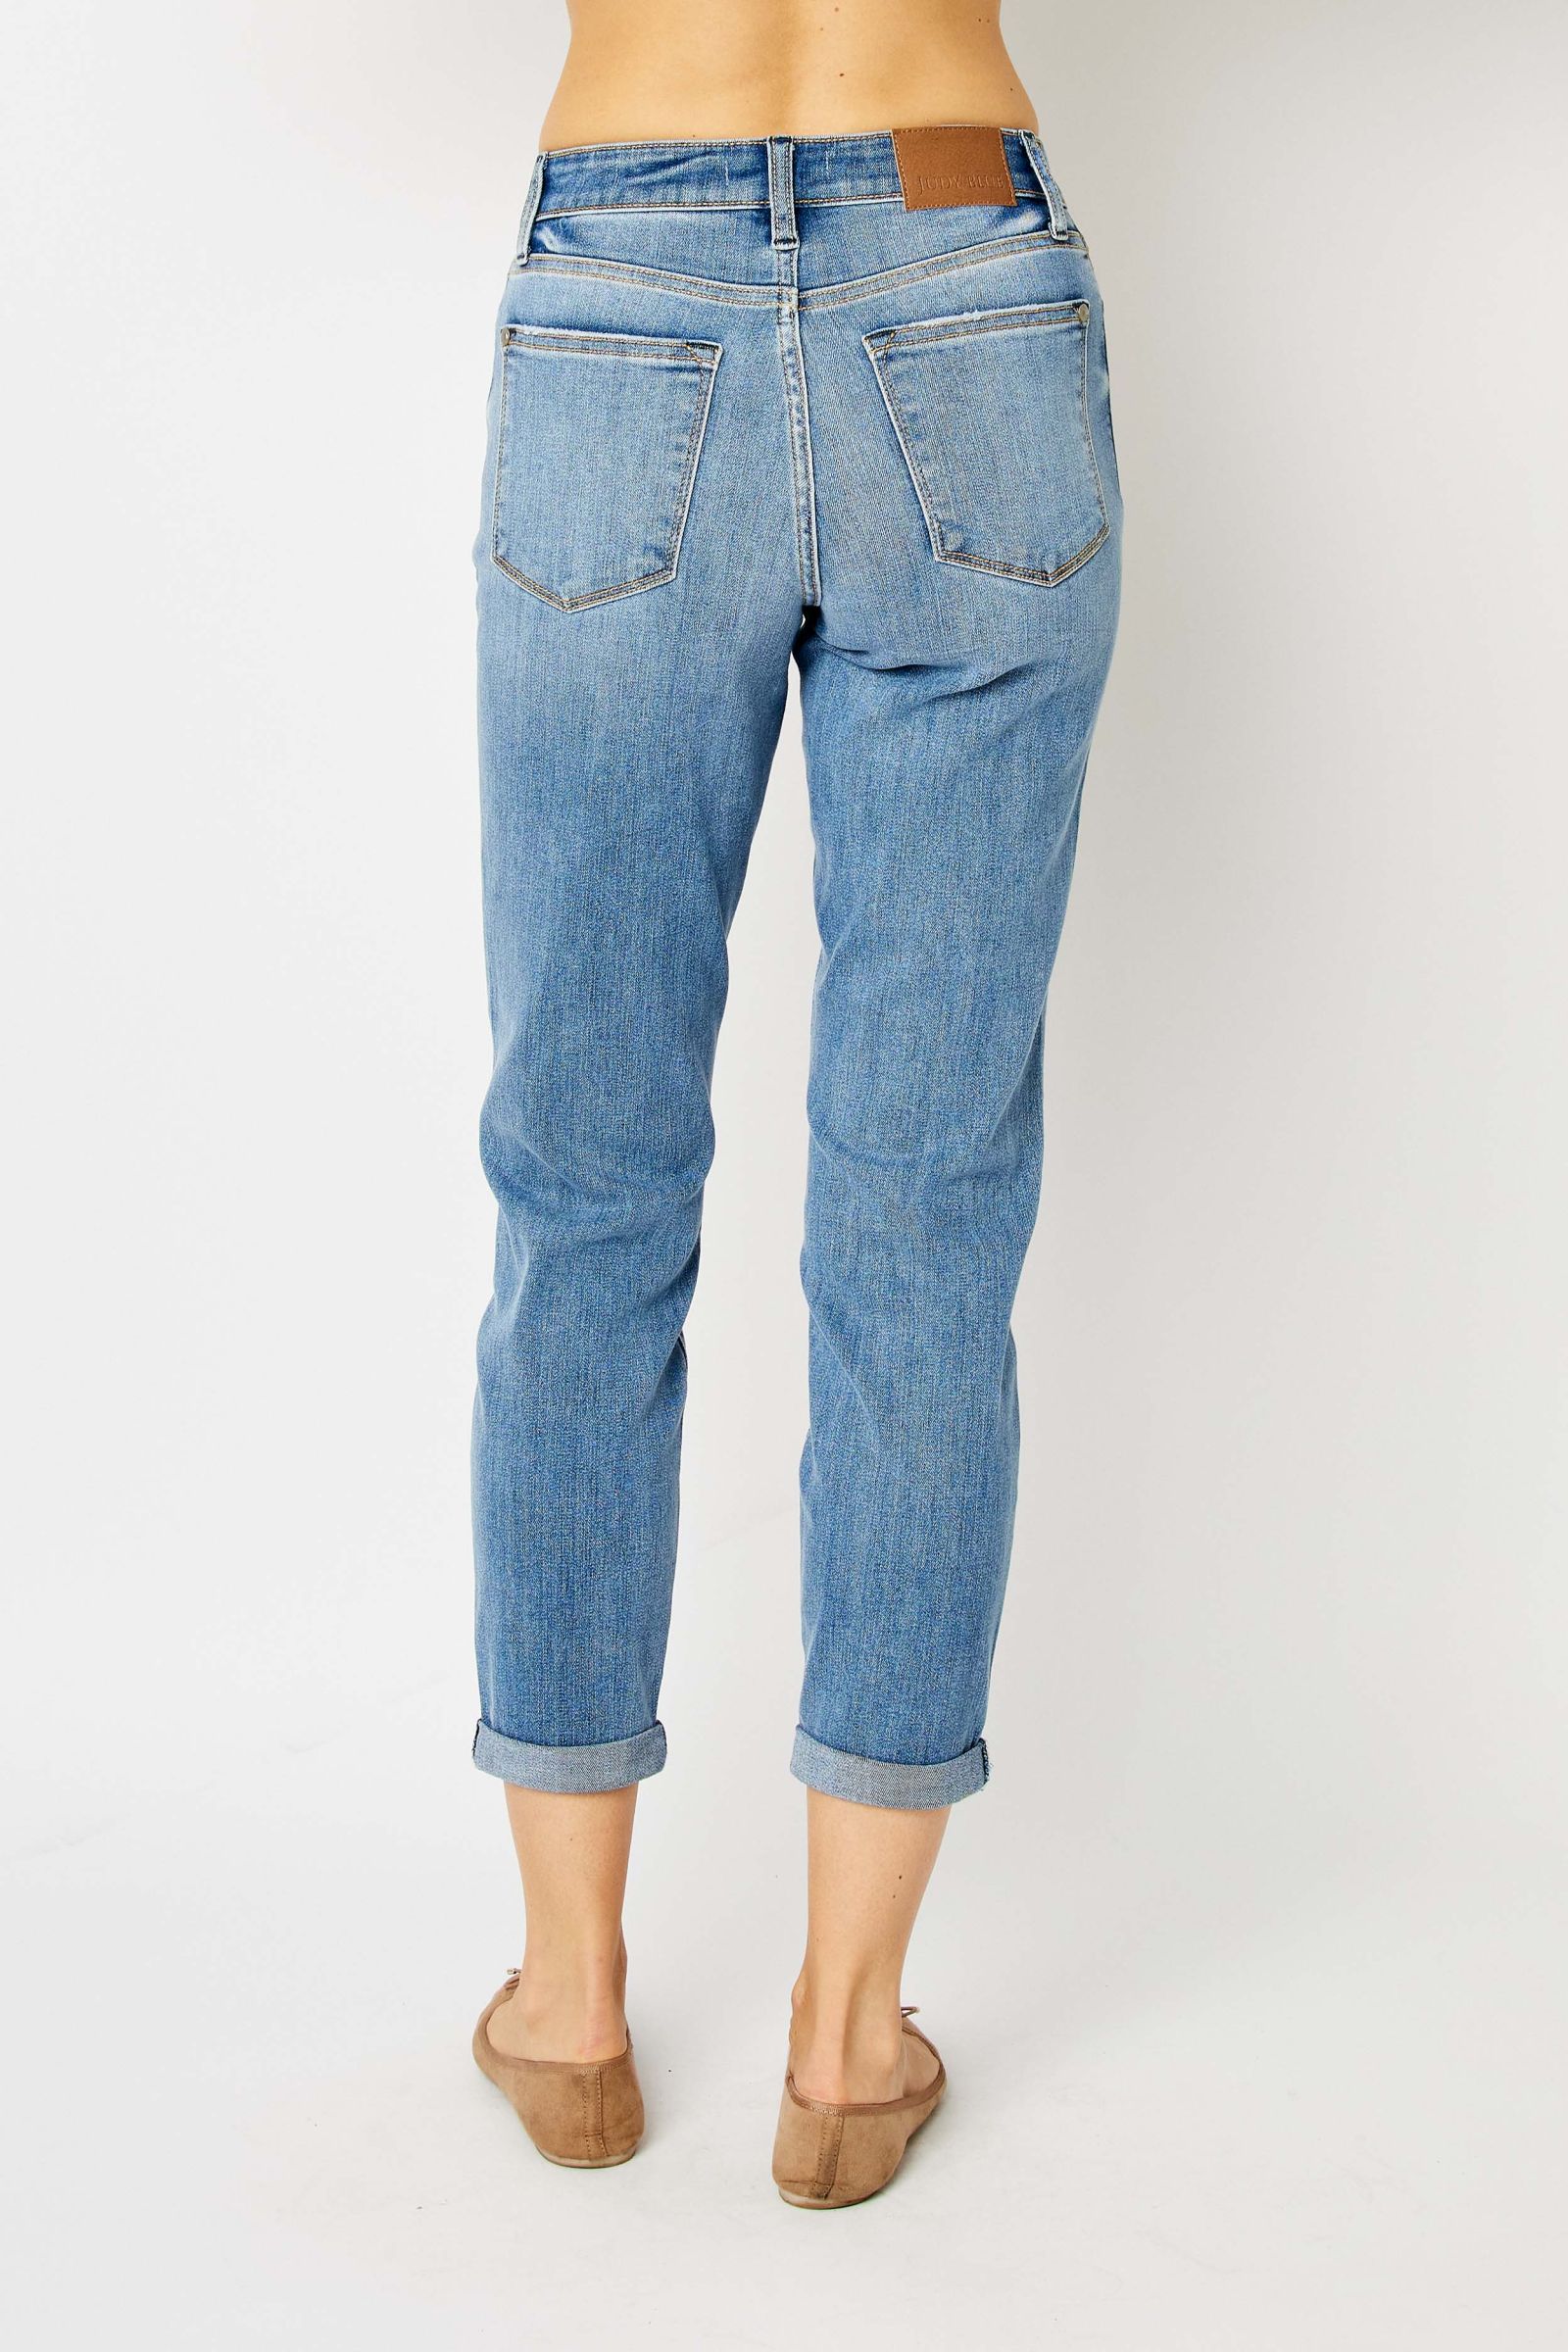 Judy Blue Heaven Sent Mid Rise Cuffed Slim Jeans - Medium Wash